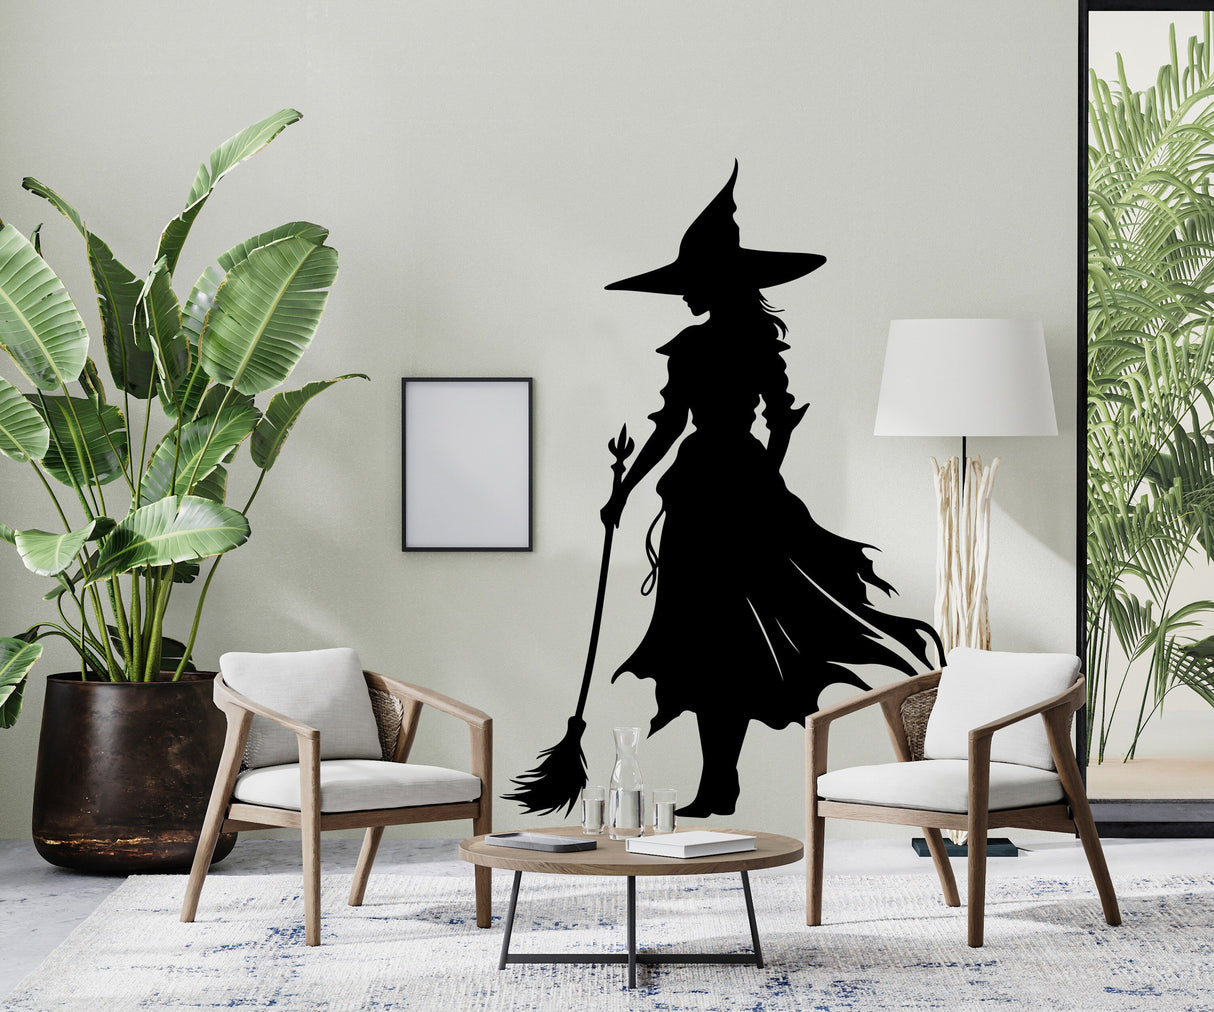 Wicked Witch Silhouette Window Decal - Halloween Witchy Shadow Sticker